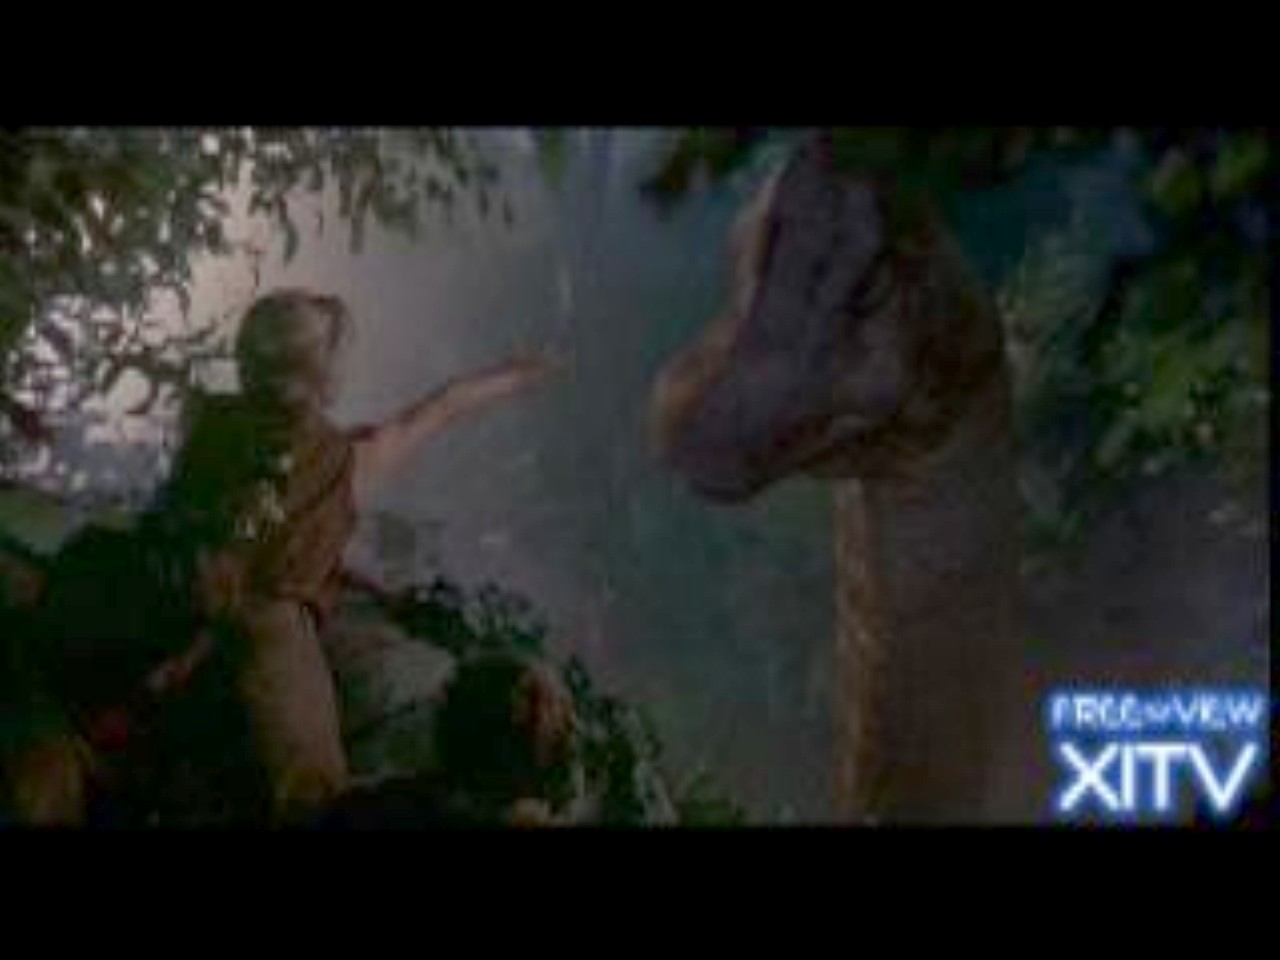 XITV FREE <> VIEW™ Jurassic Park! Starring Laura Dern! XITV Is Must See TV!